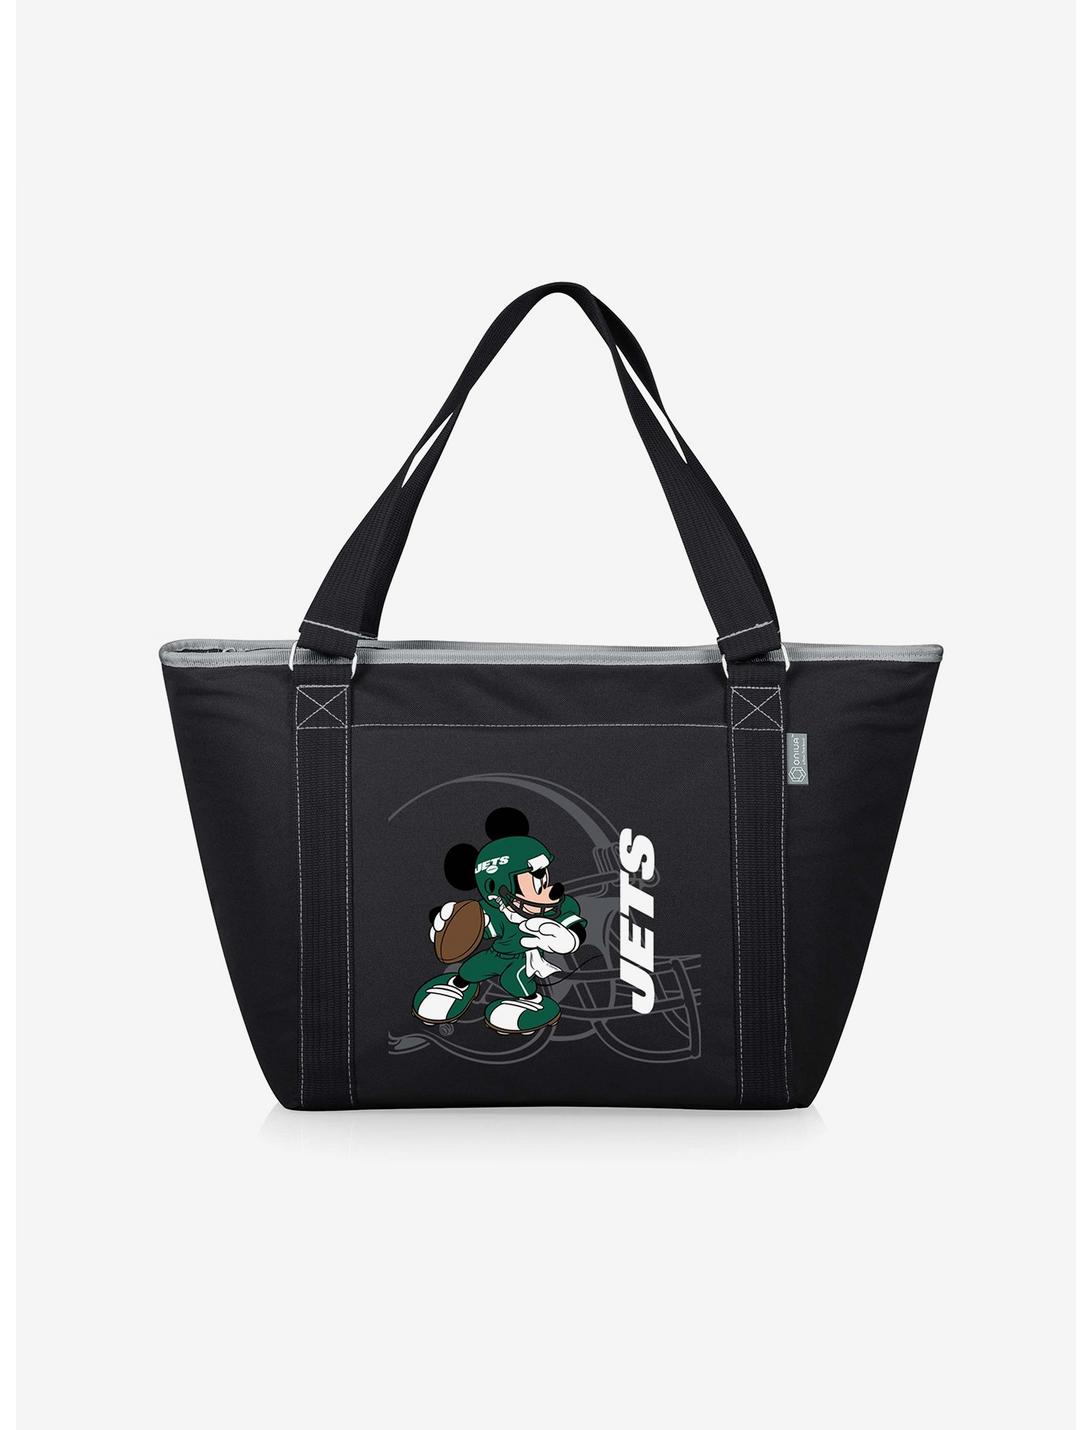 Disney Mickey Mouse NFL New York Jets Tote Cooler Bag, , hi-res